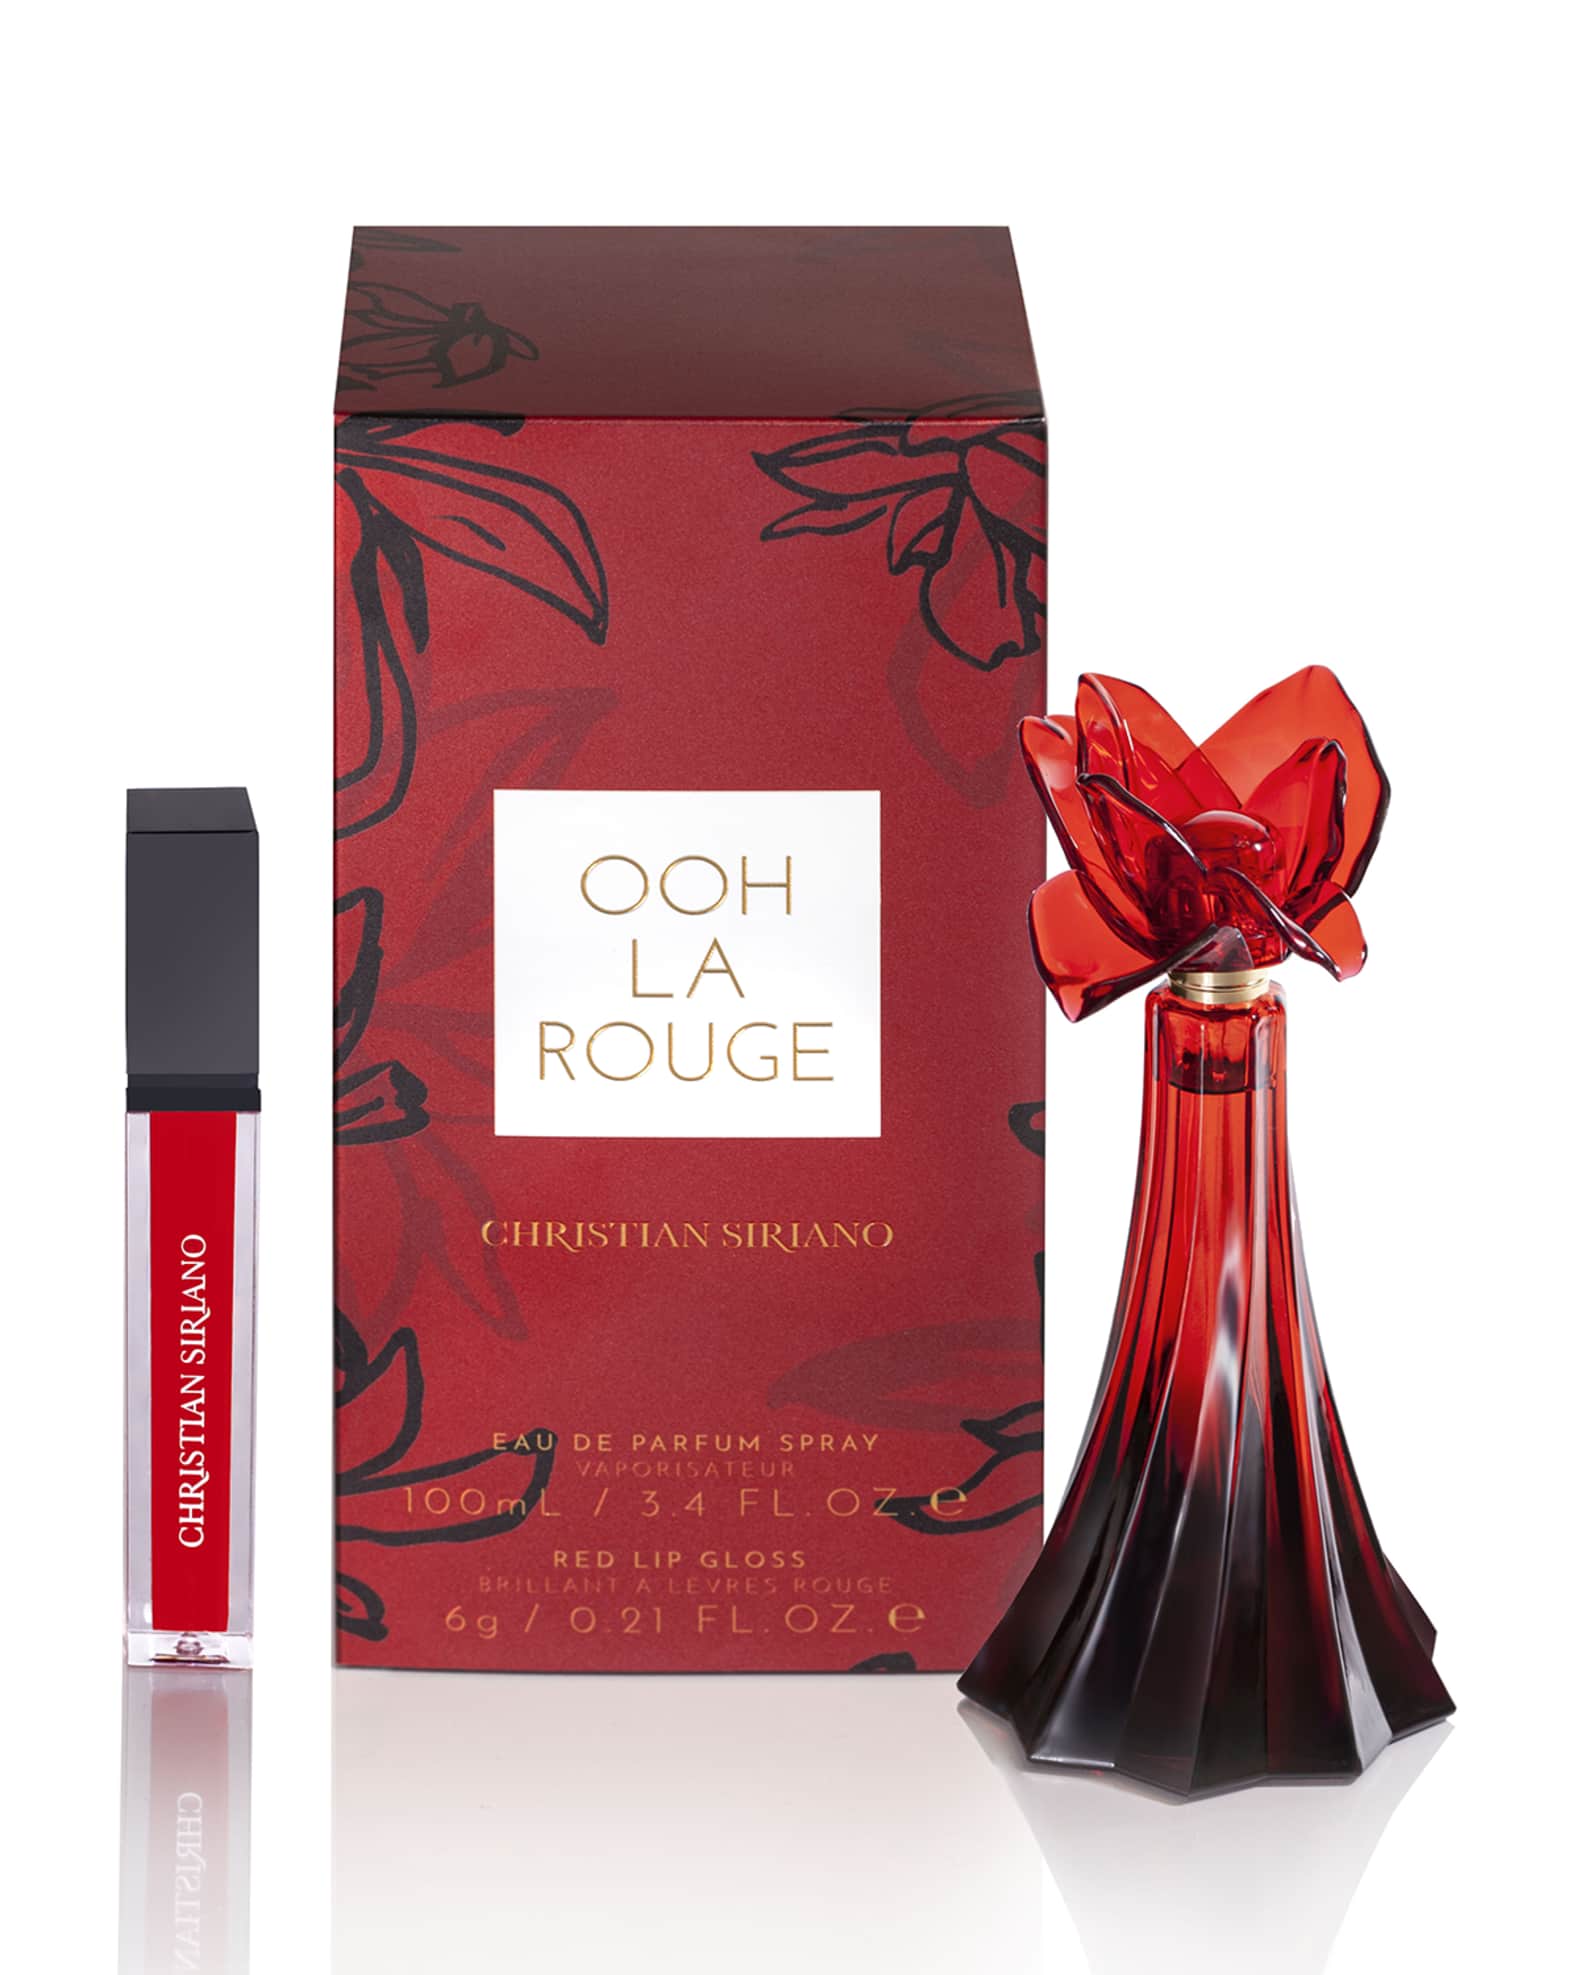 Christian Siriano Ooh La Rouge Eau de Parfum 3.4 oz Spray.